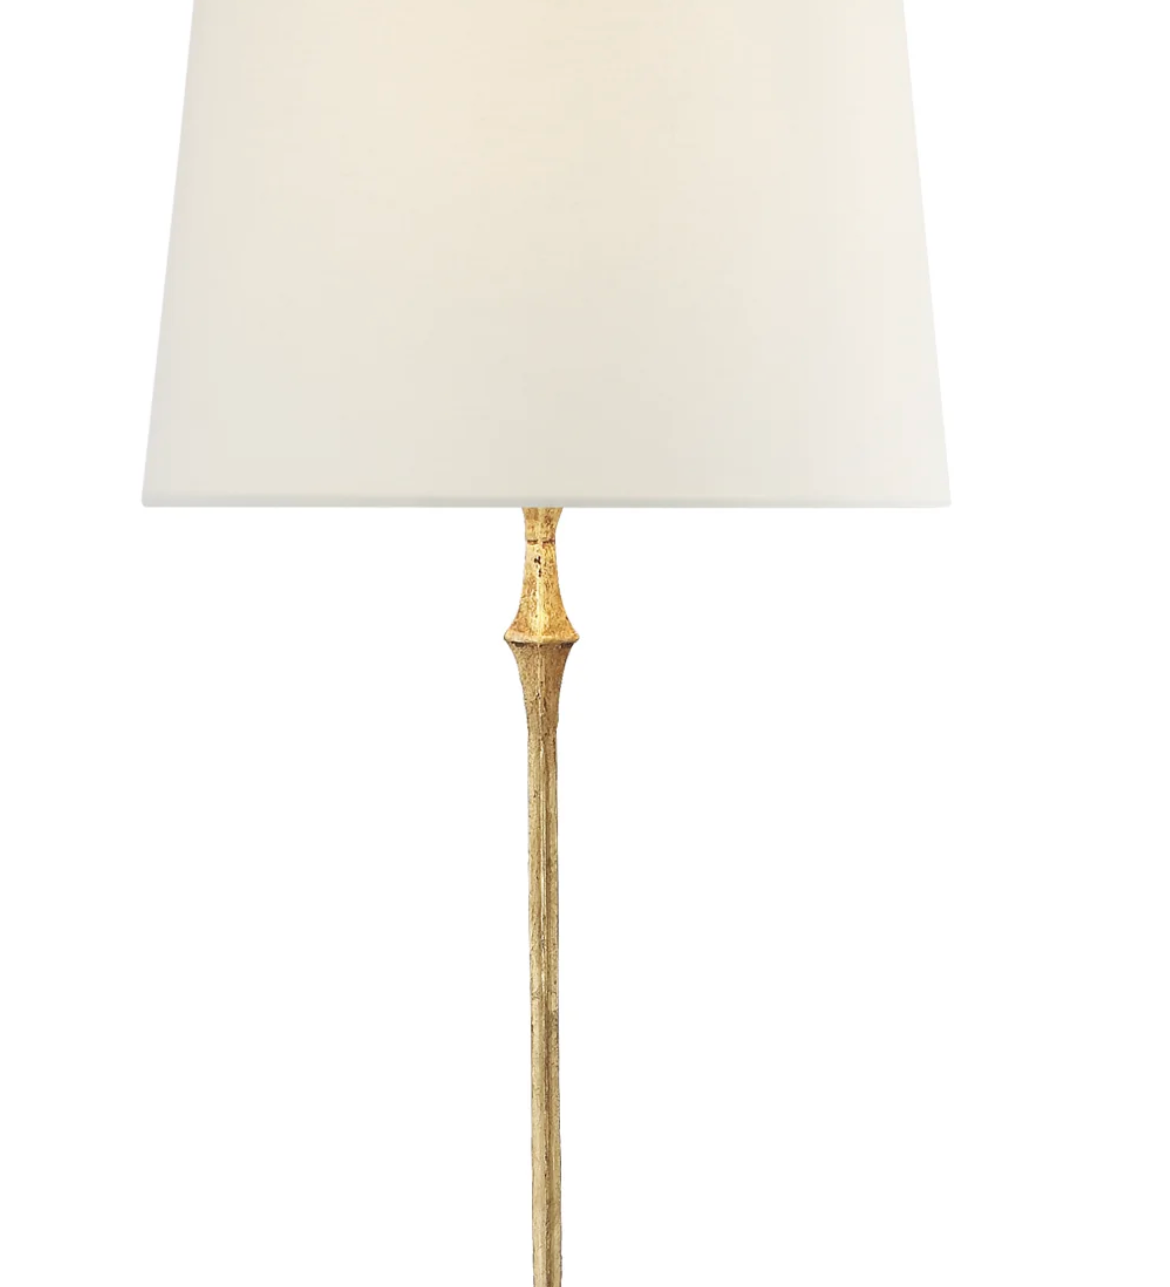 Dauphine Bedside Lamp